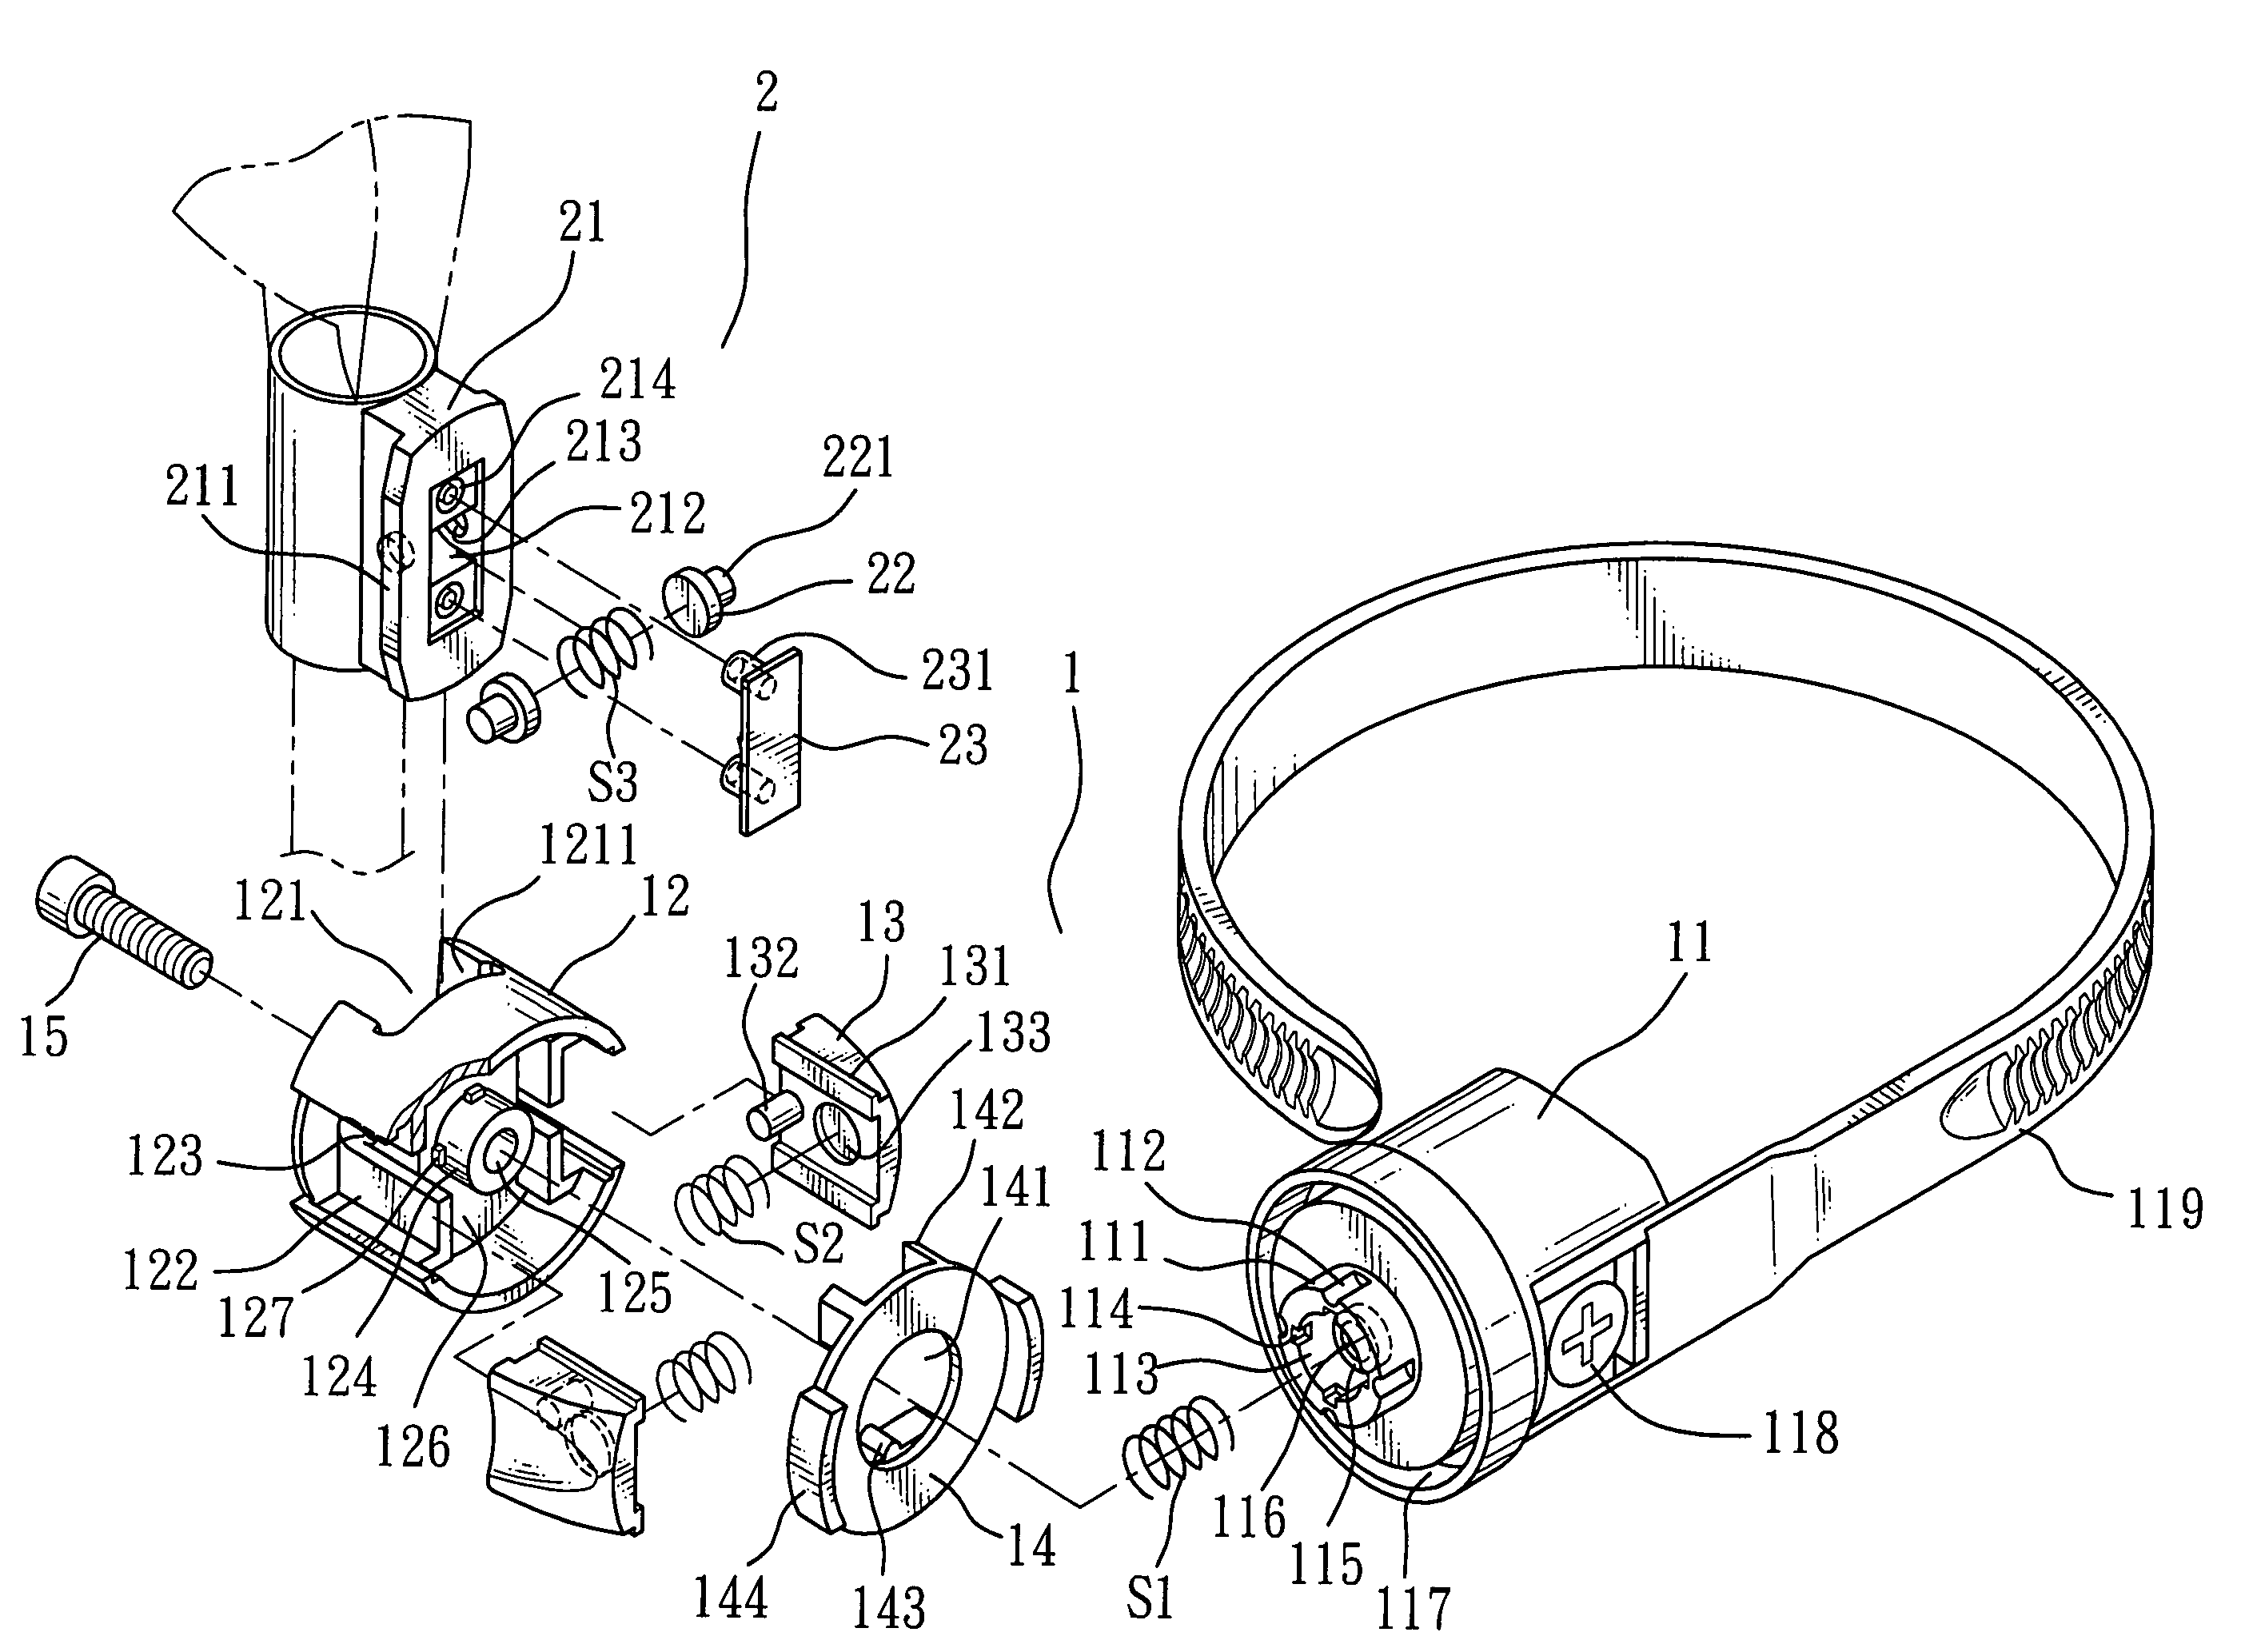 Bicycle lock holding apparatus